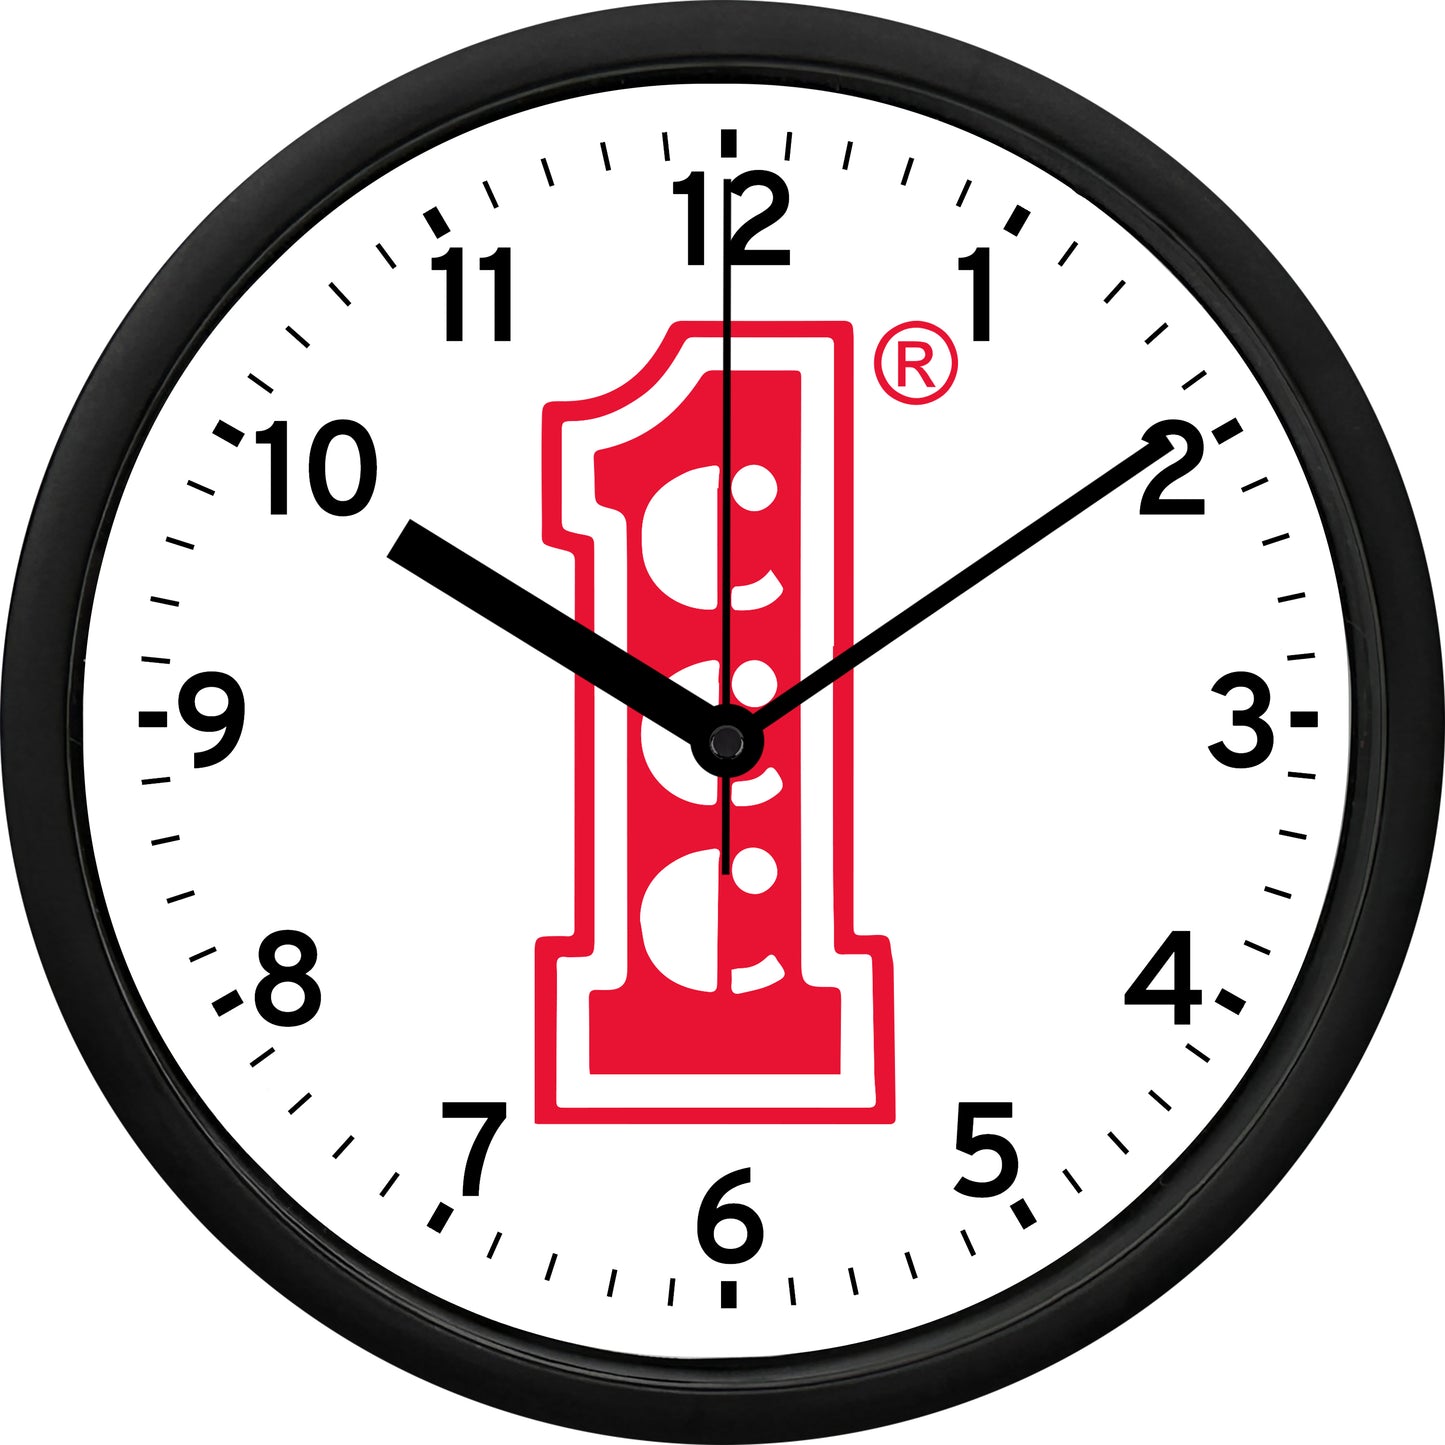 Crete Carrier Corp. "1 CCC" Wall Clock